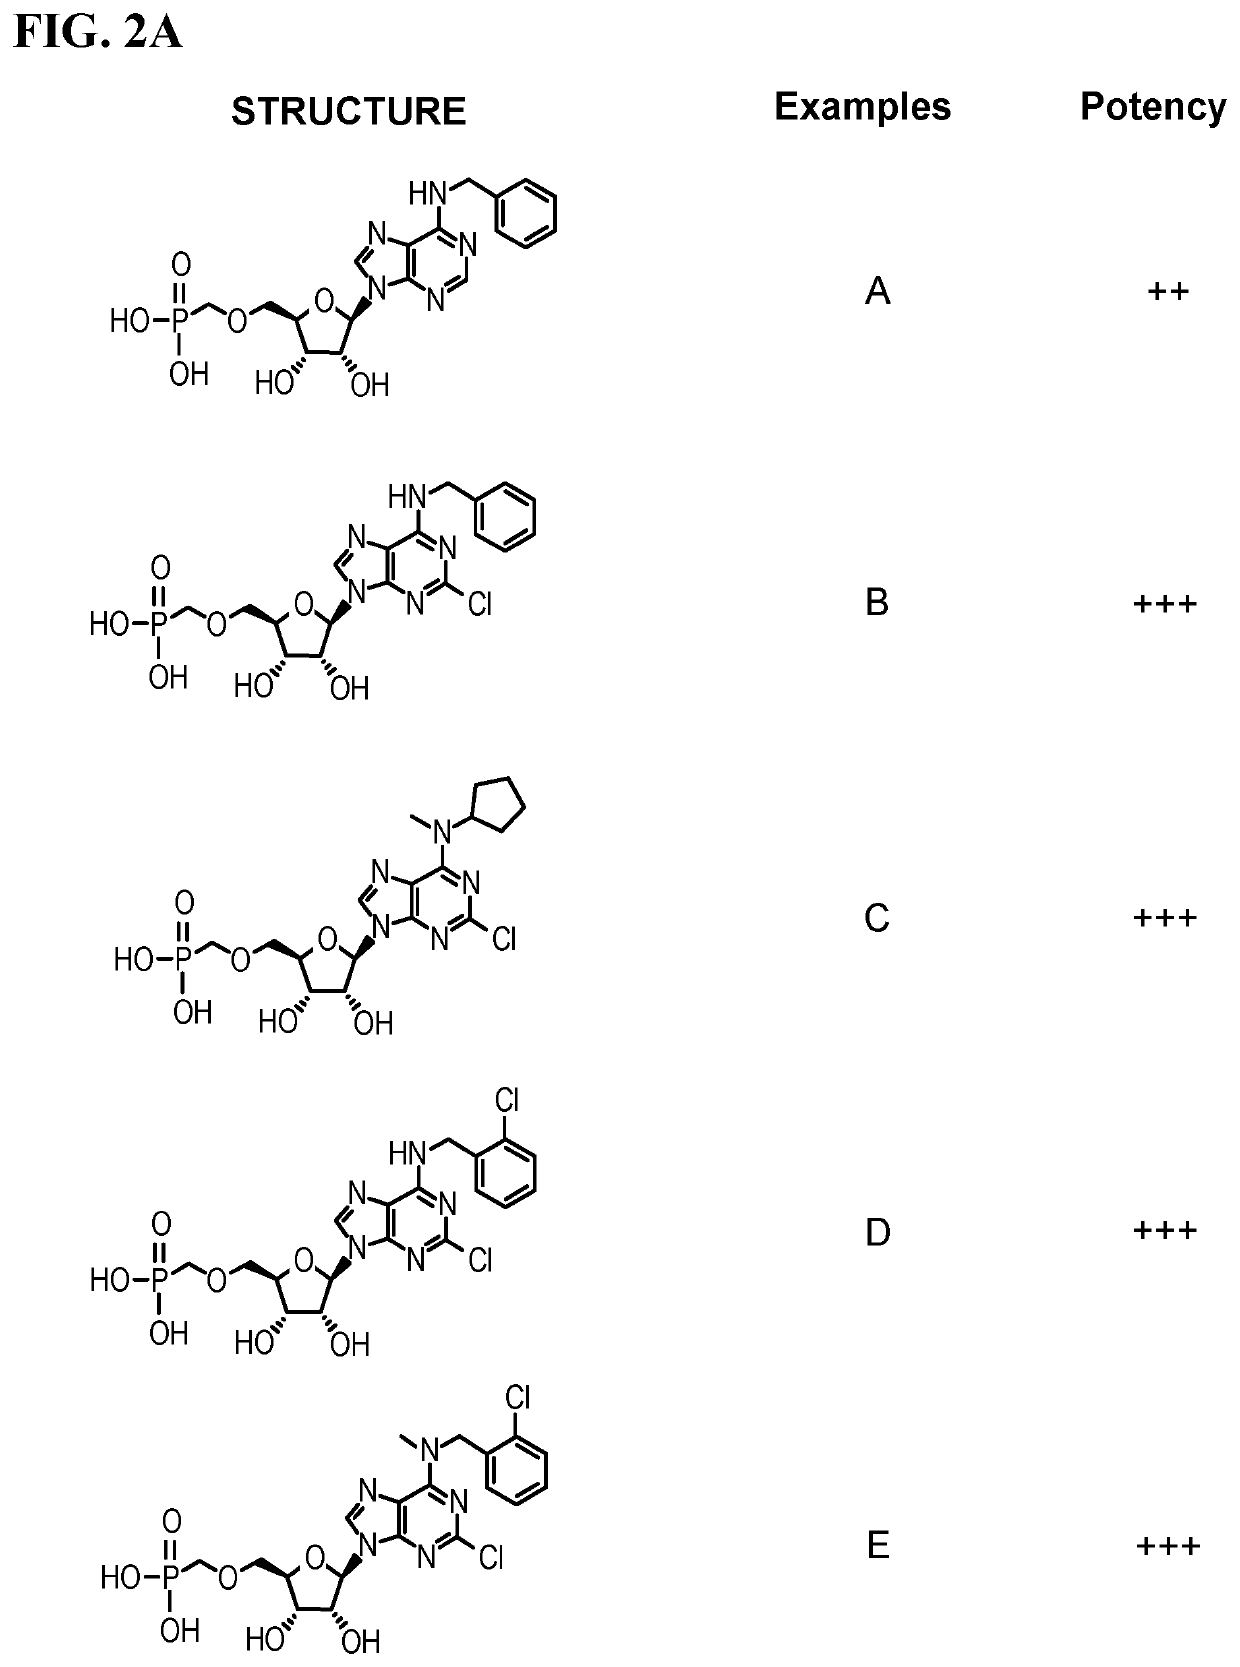 Inhibitors of adenosine 5'-nucleotidase